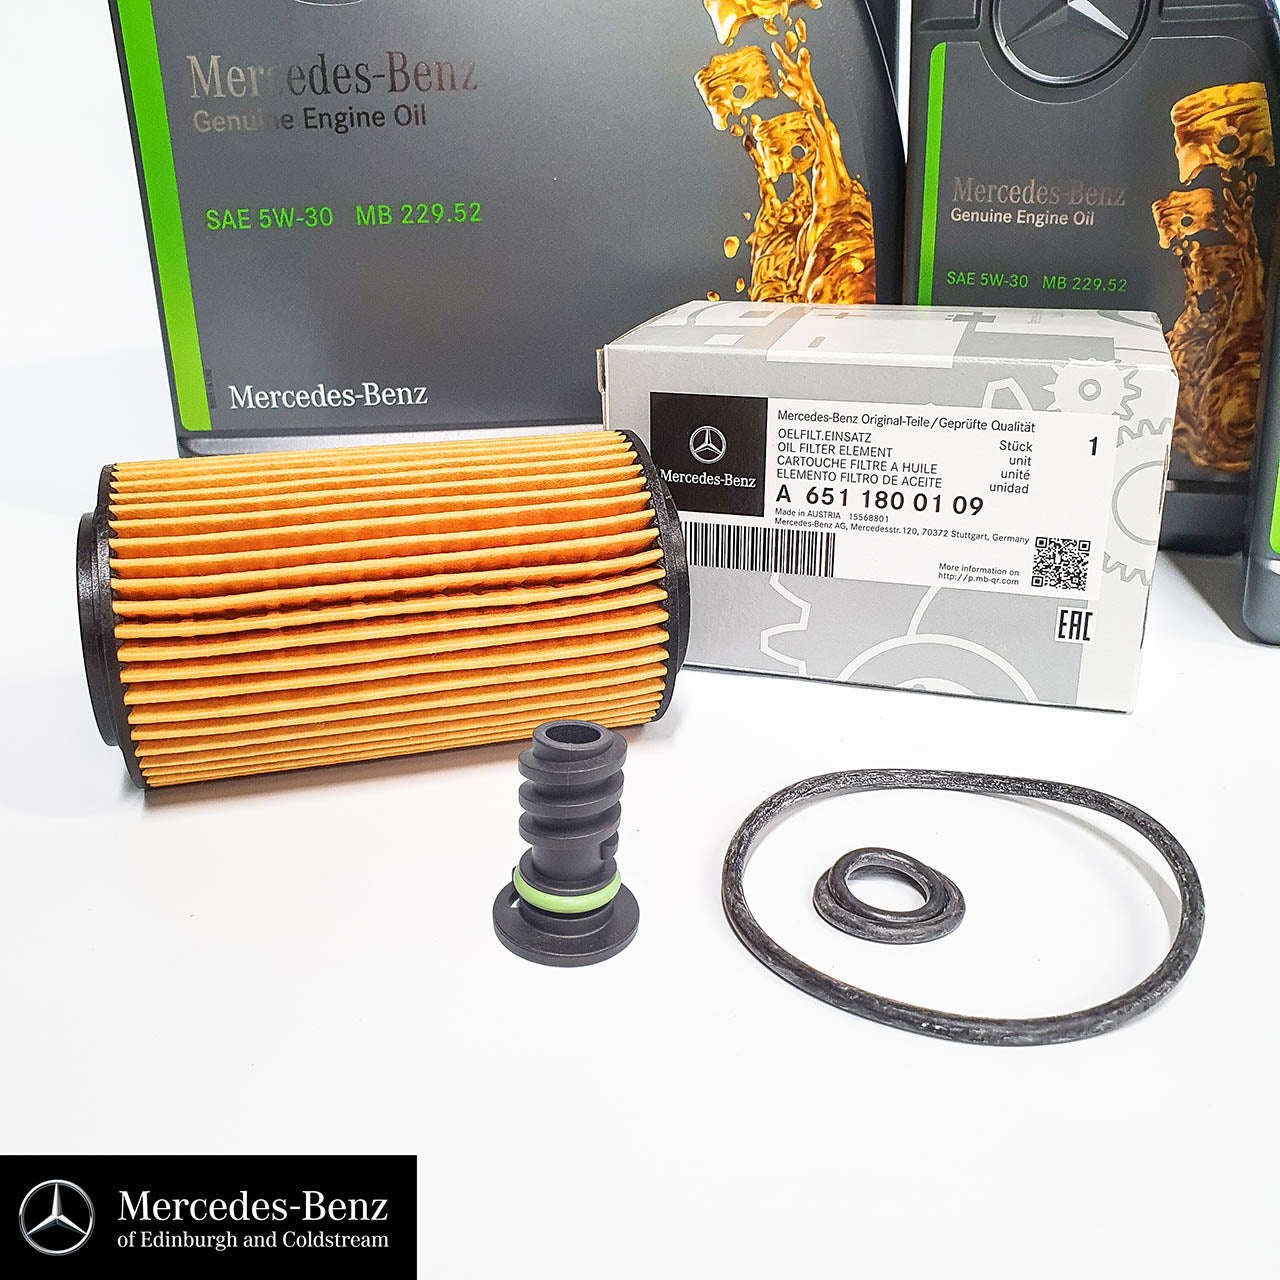 Genuine Mercedes-Benz service kit with sump plug for OM651 Diesel Engine